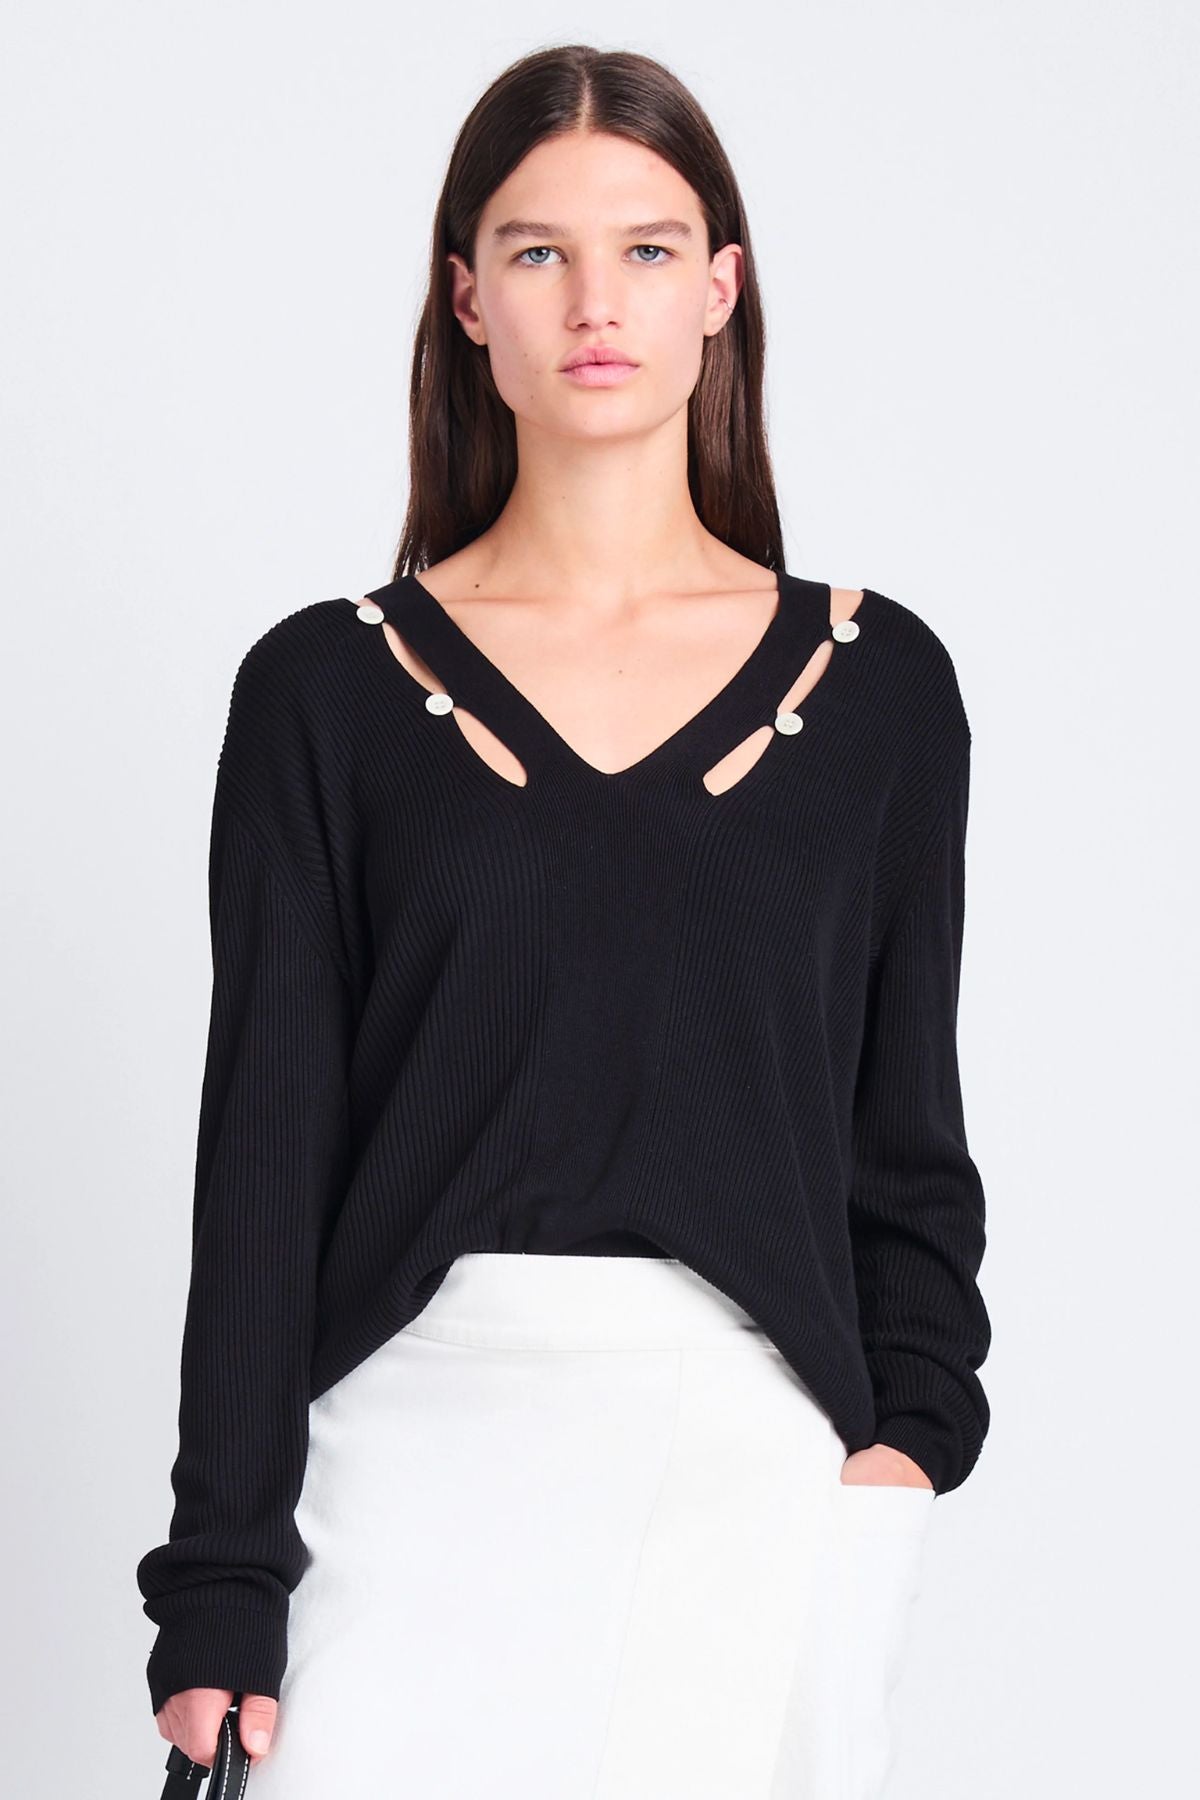 Proenza Schouler White Label Elsie Knit Sweater - Black